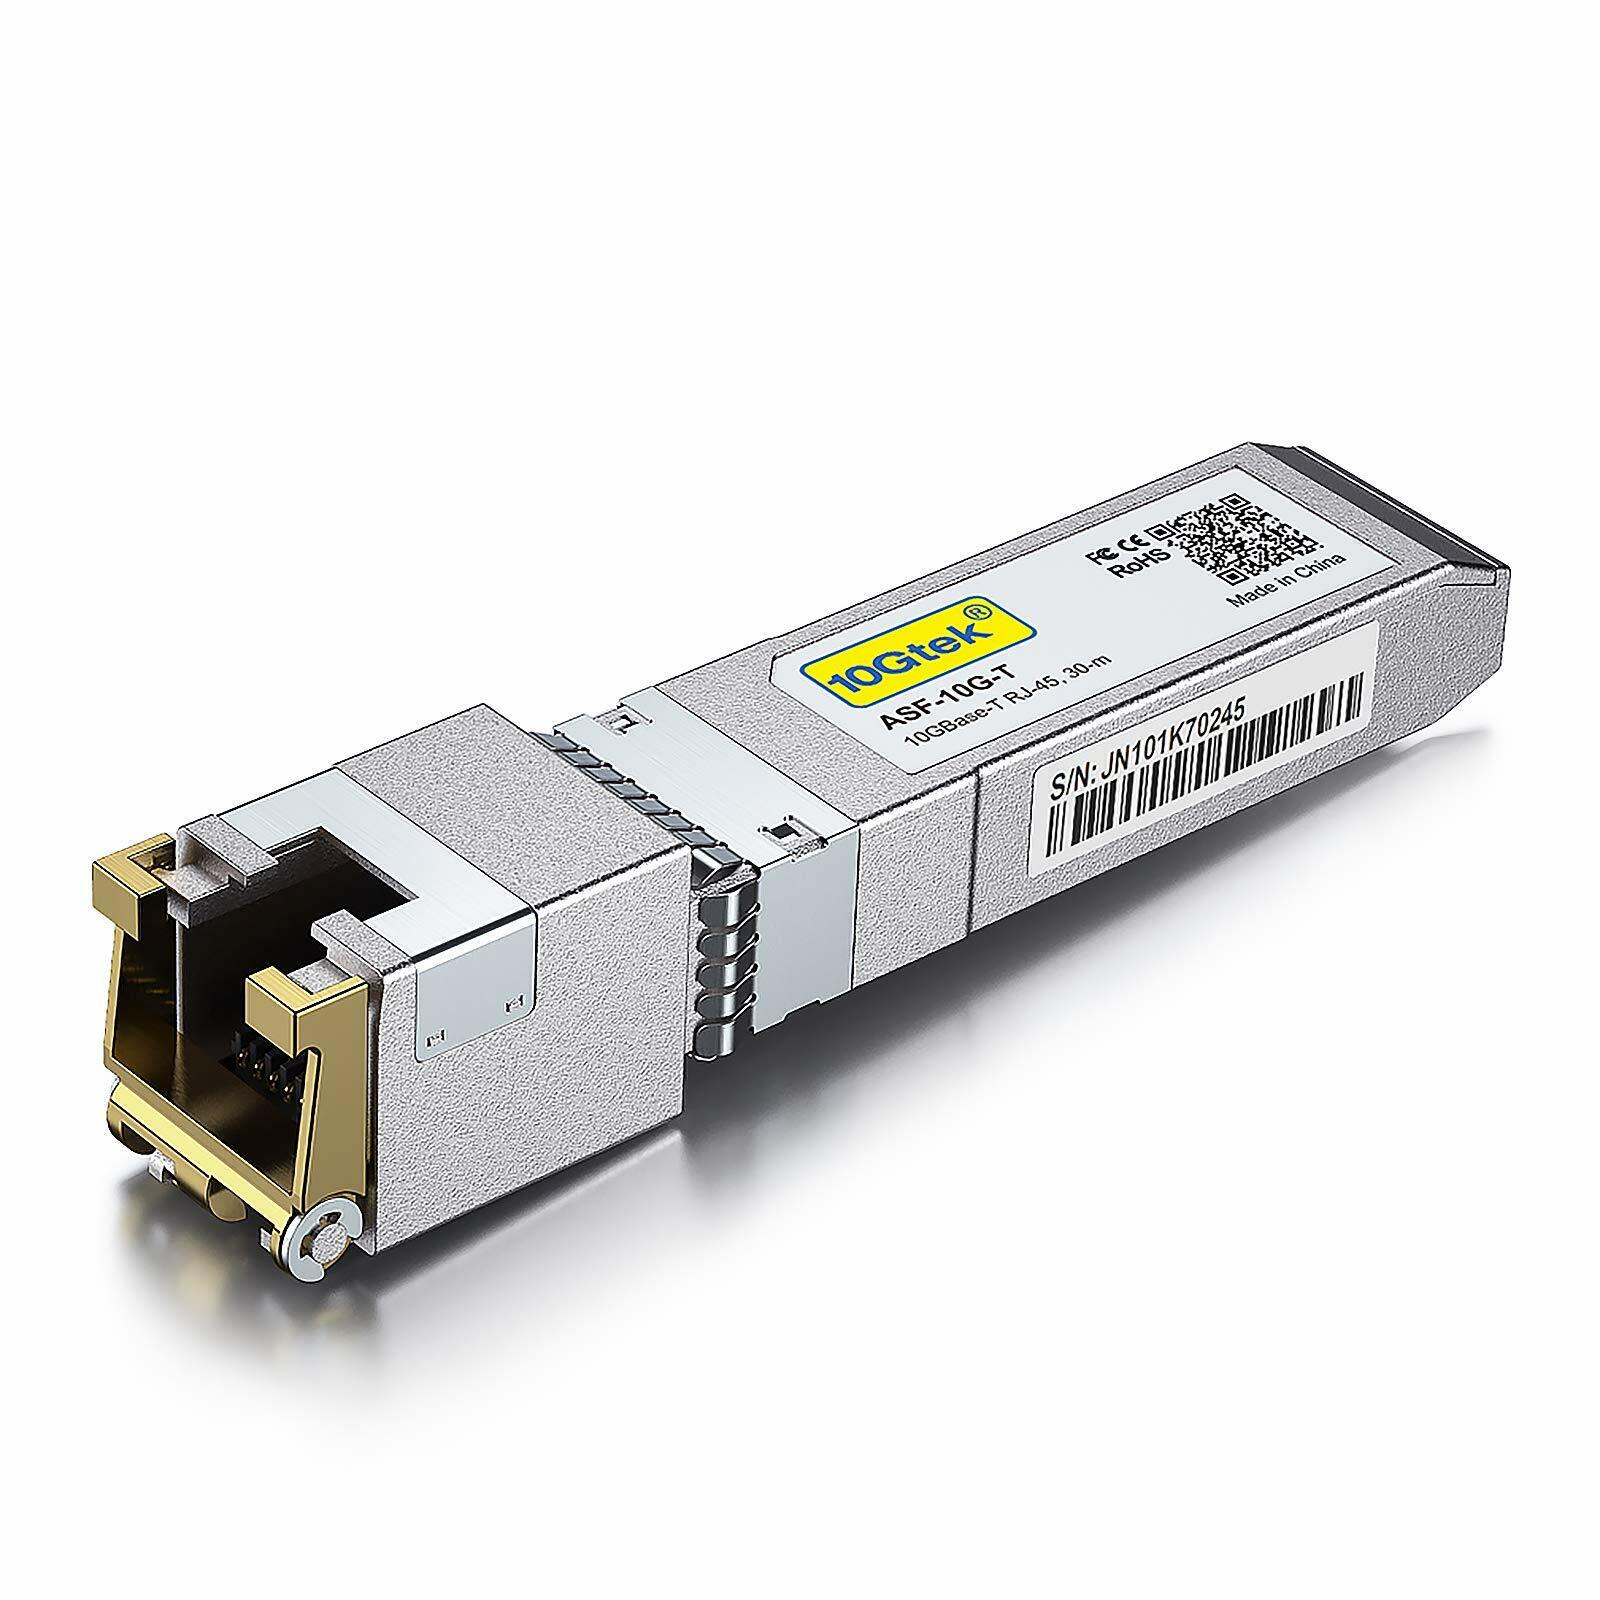 For Cisco SFP-10G-T, Ubiquiti UF-RJ45-10G Module 10G SFP+ to RJ45 10GBase-T